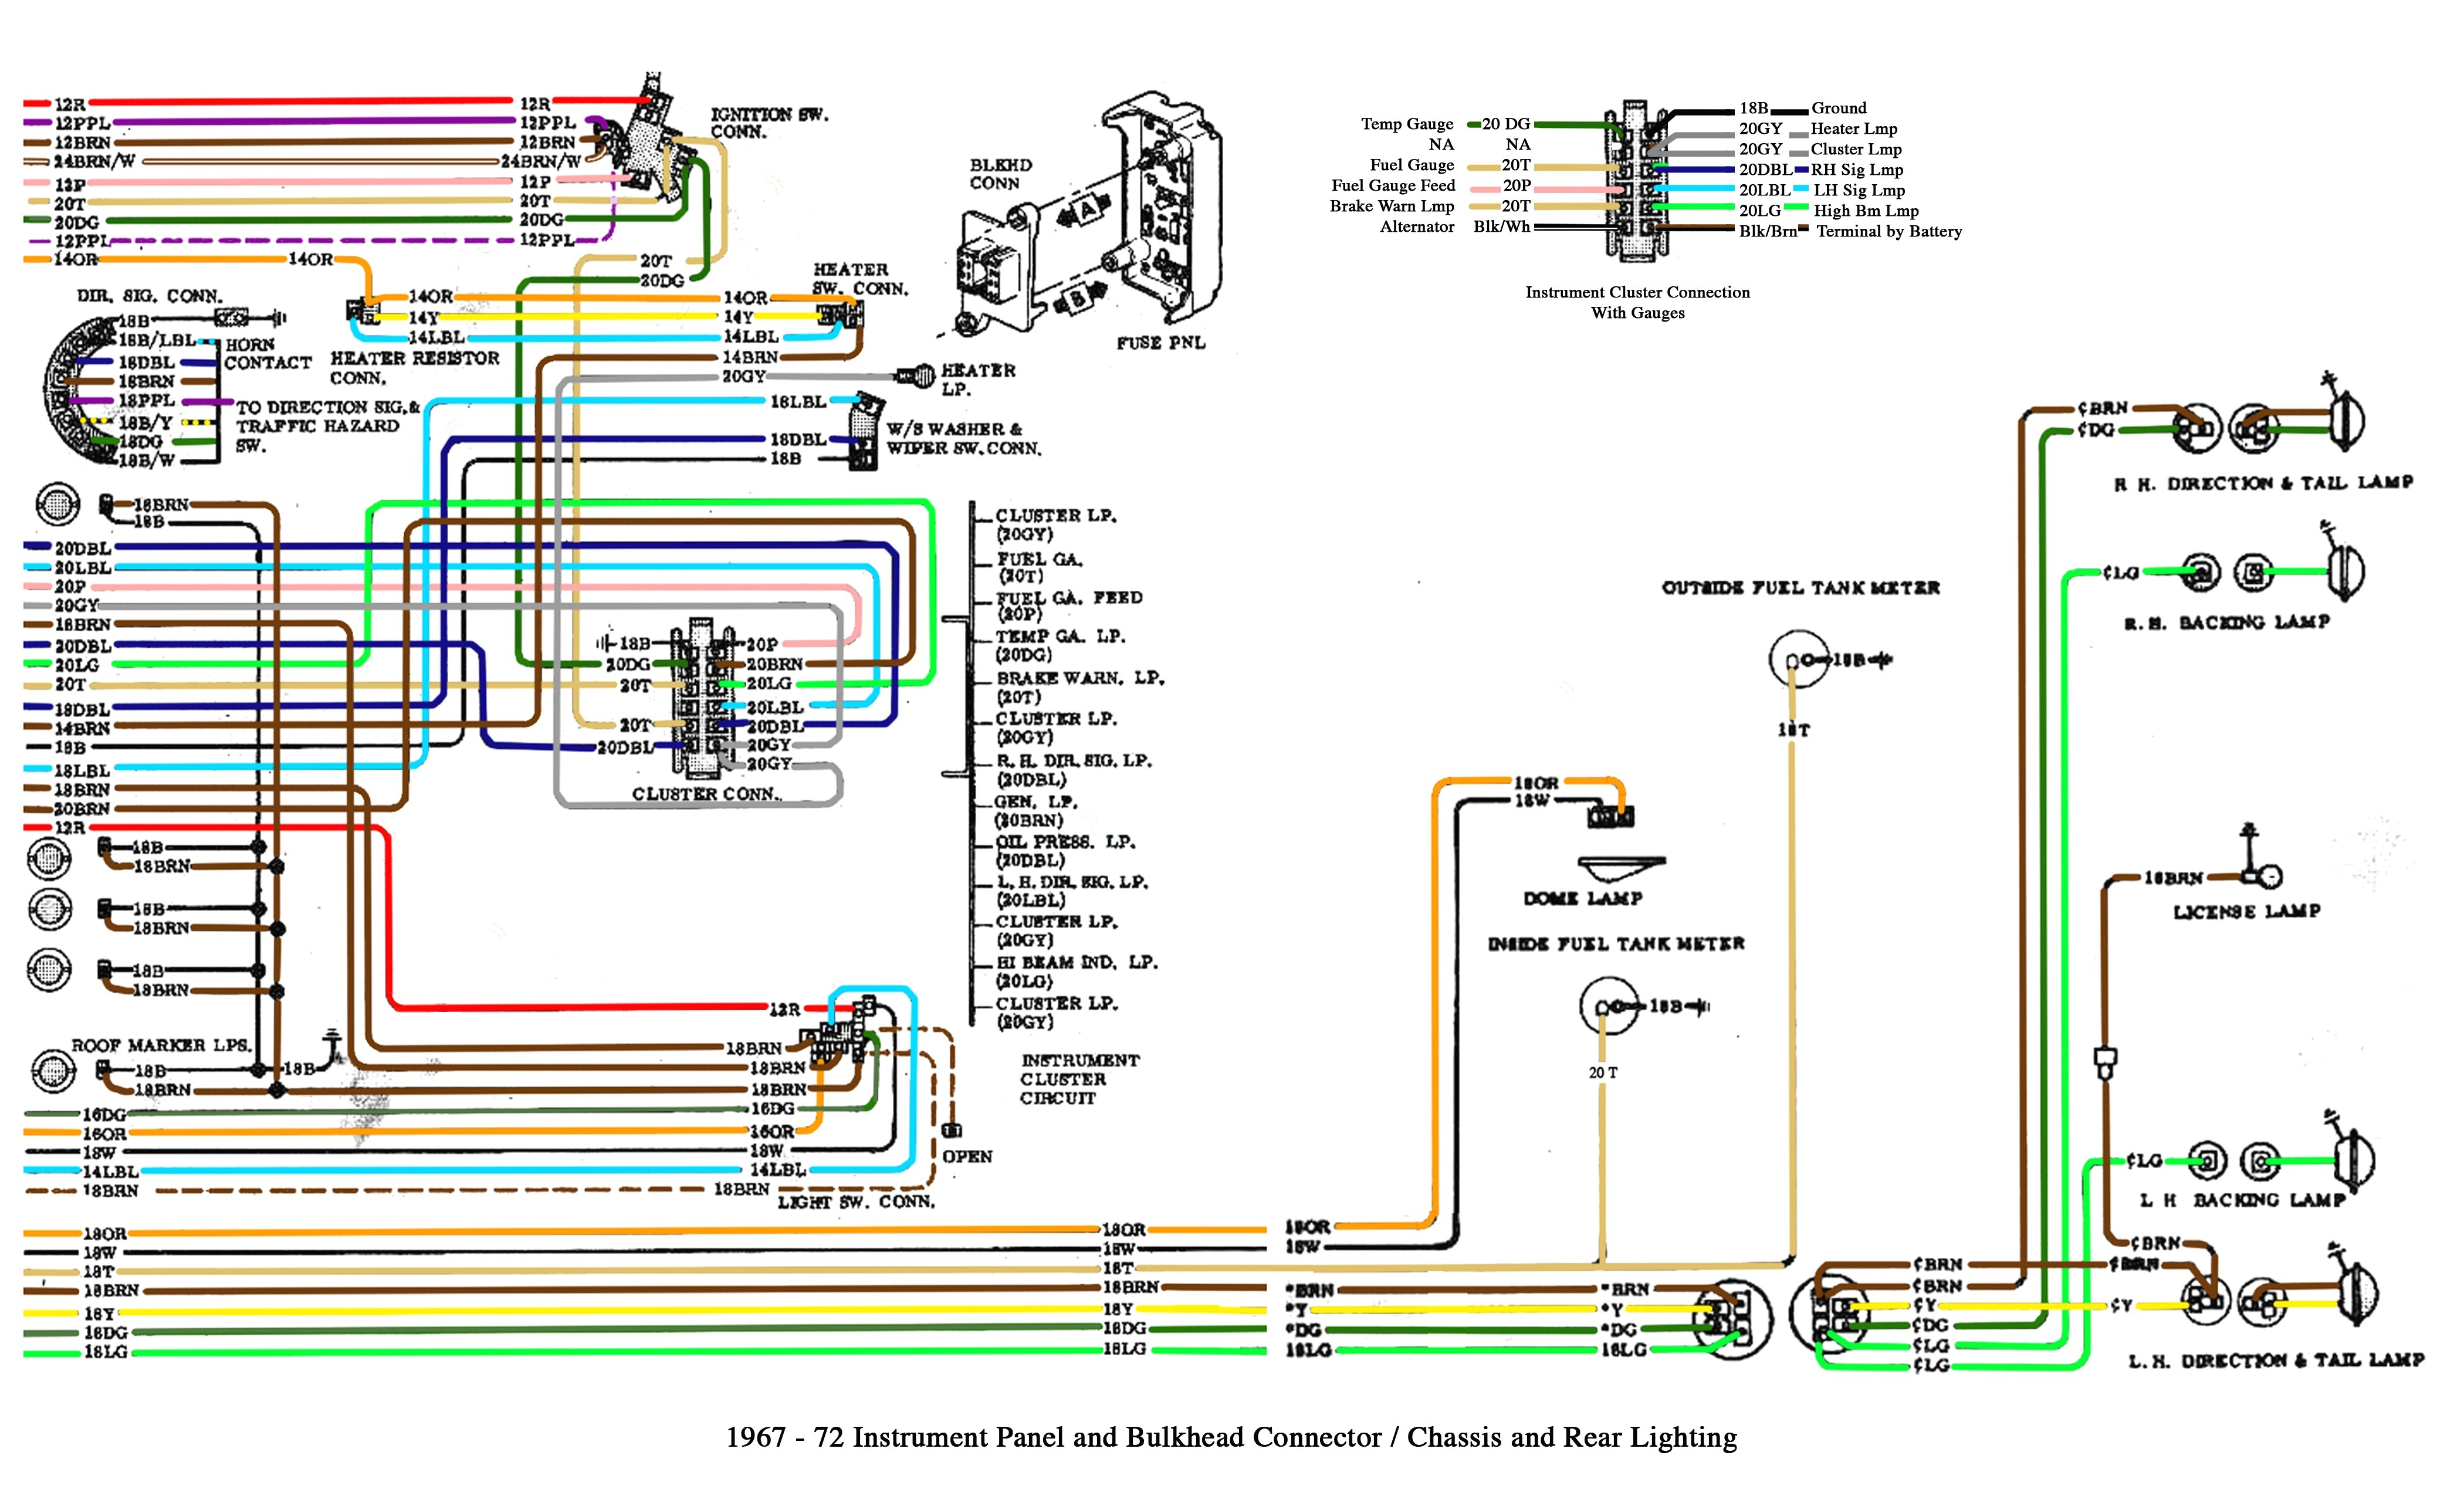 Wiring Diagram PDF: 2003 Chevy Silverado Engine Diagram